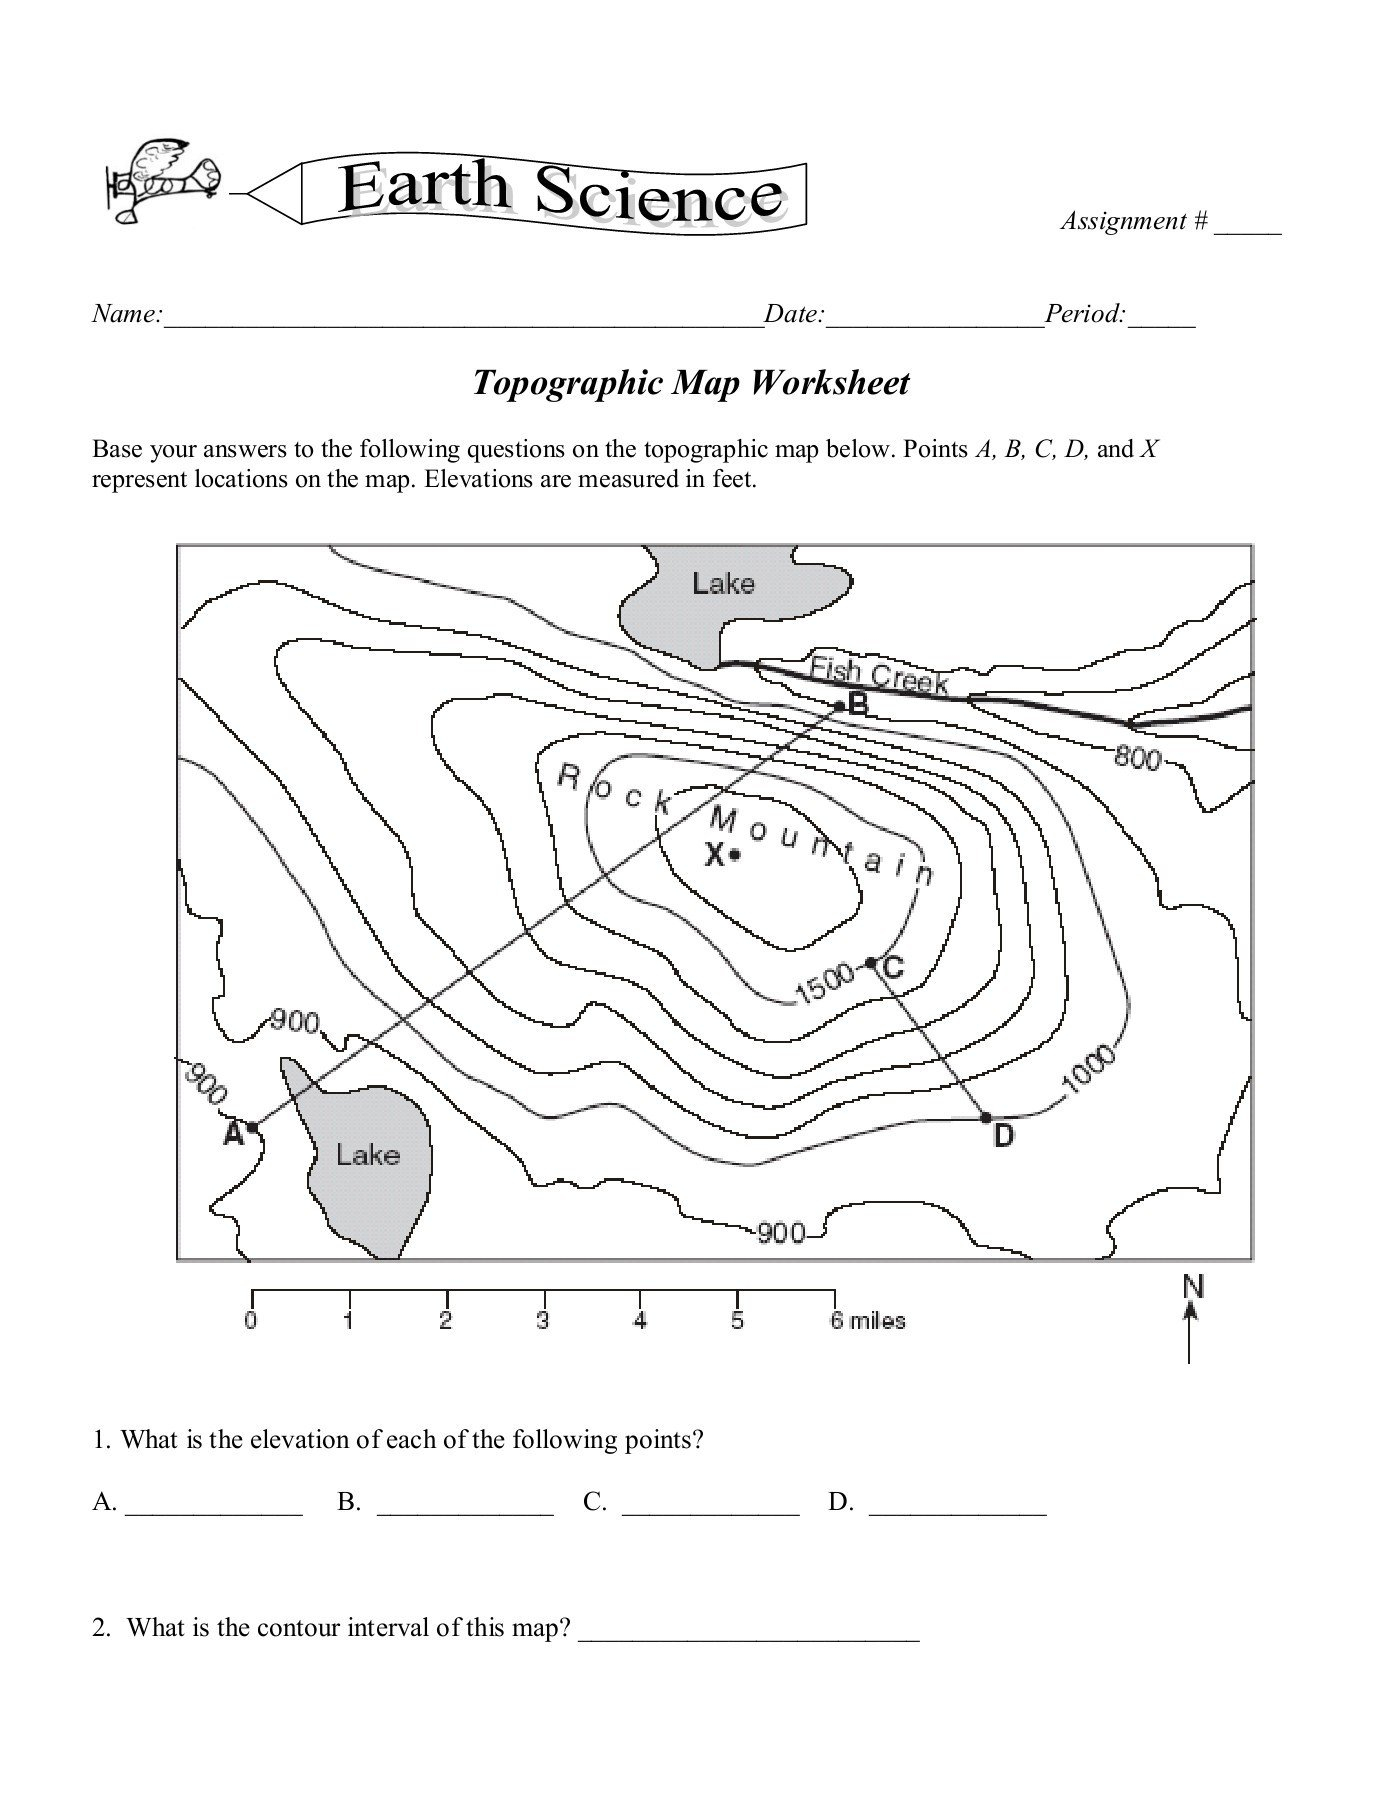 Topographic Map Worksheet  North Tonawanda City Schools Pages 1  6 Within Topographic Map Worksheet Answers